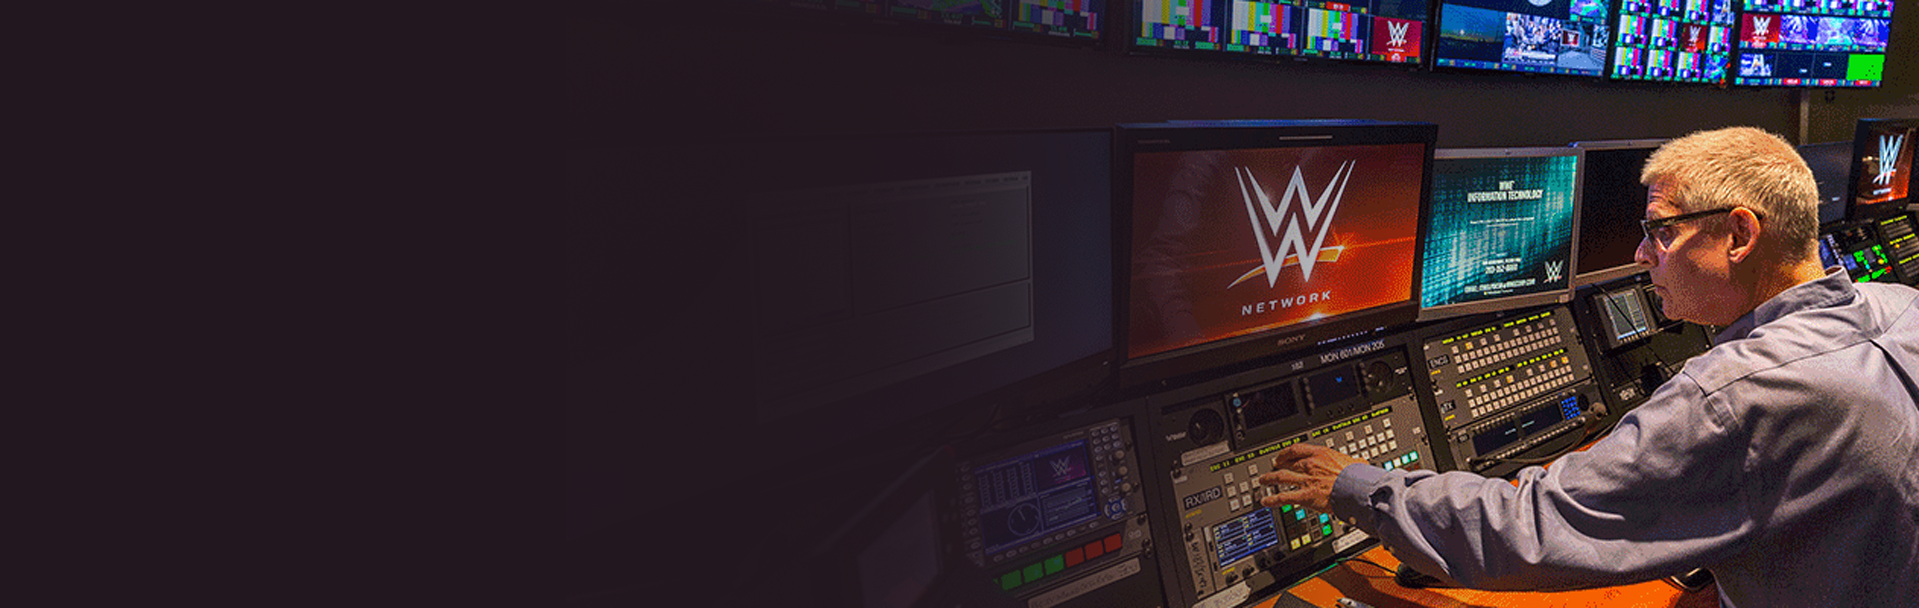 WWE Enhances Production Efficiency with High Performance KVM